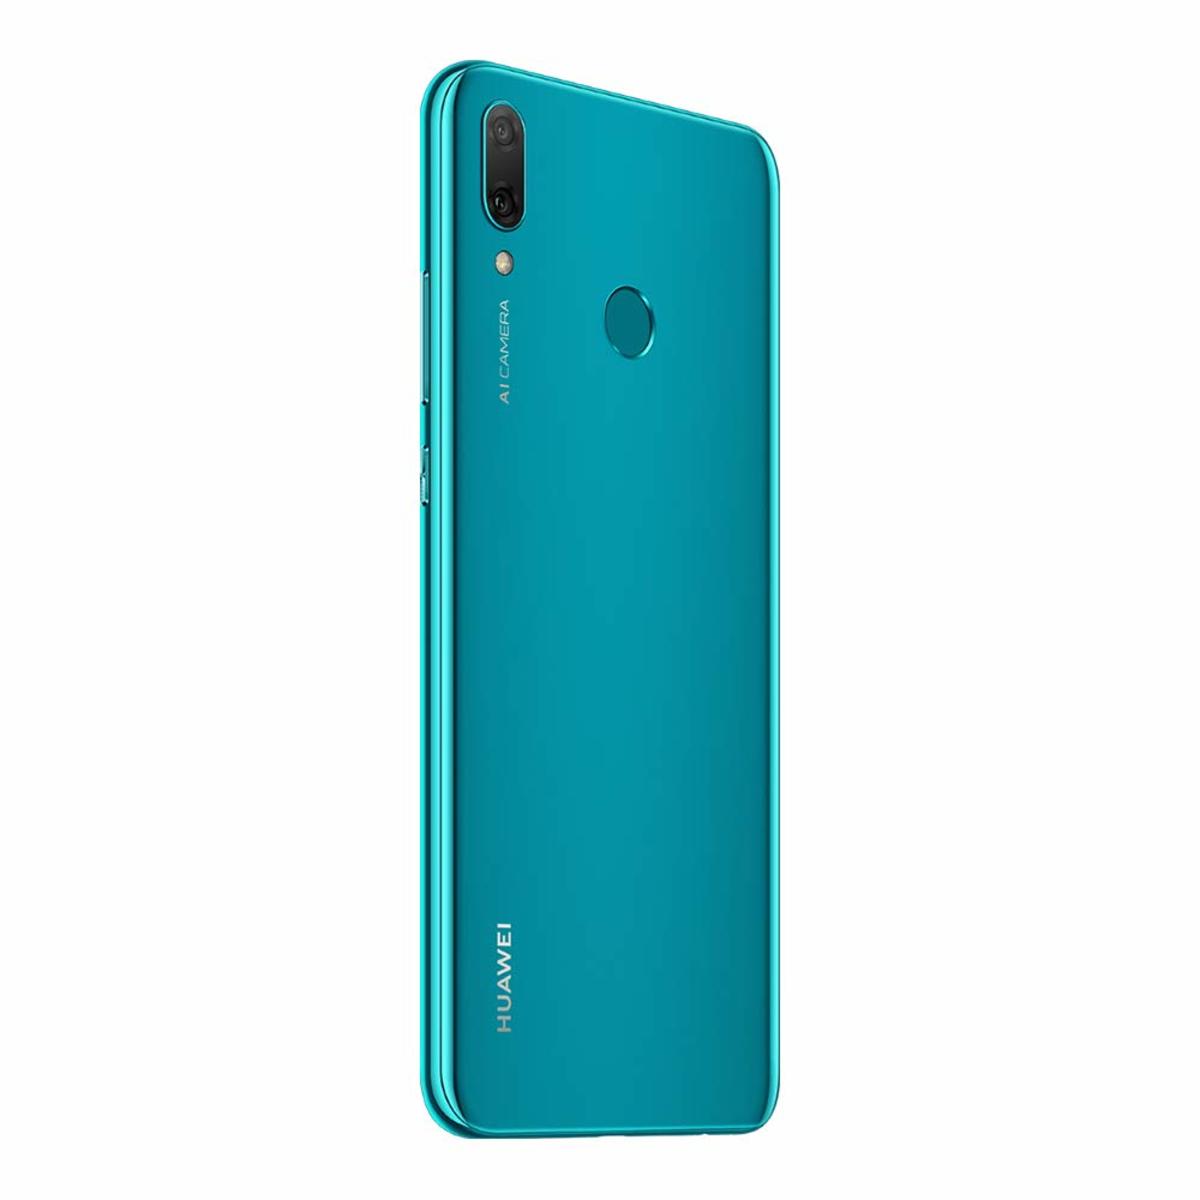 Huawei Y9-2019 128GB Sapphire Blue